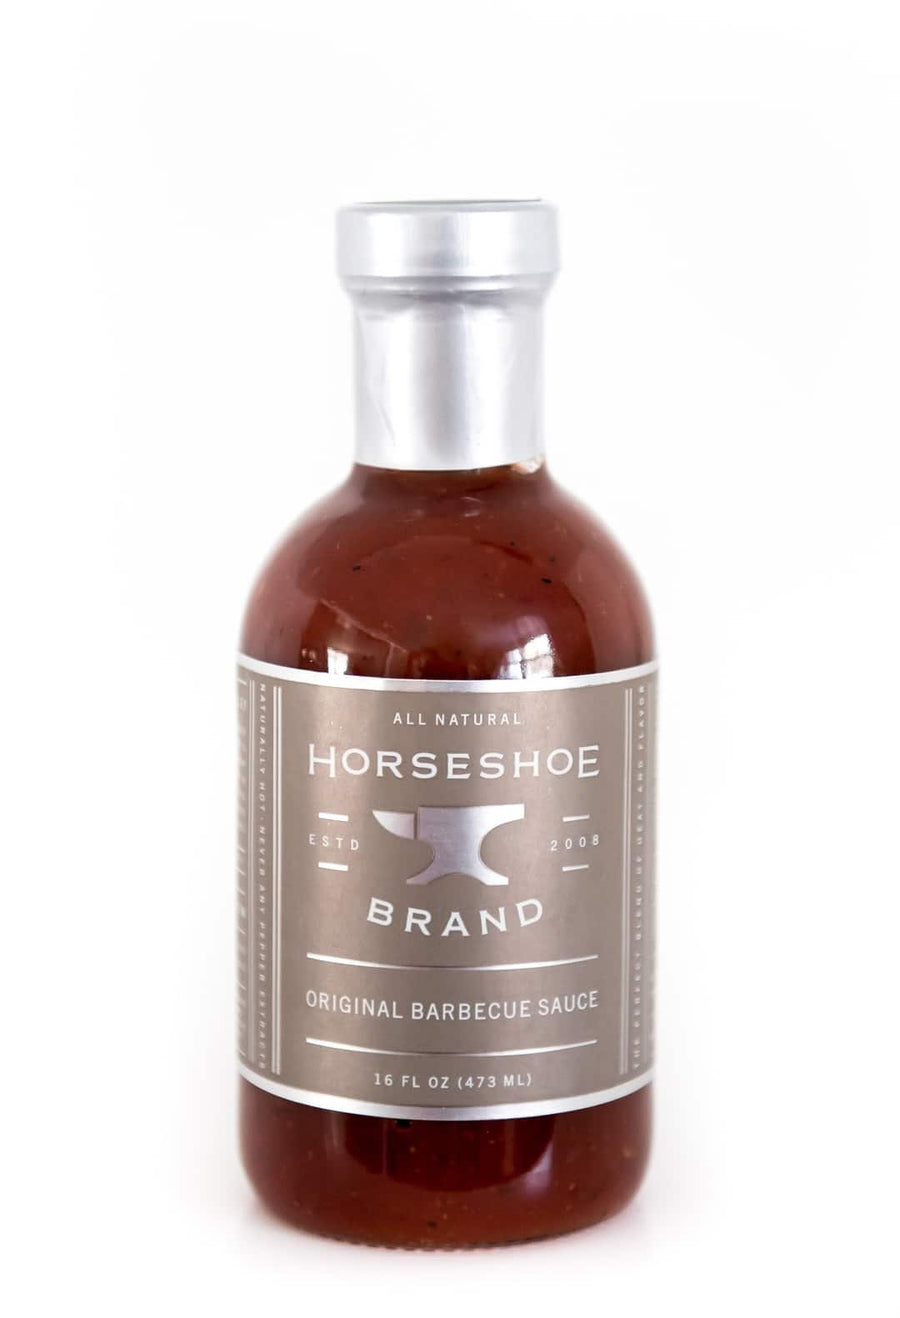 Horseshoe Brand Original Barbecue Sauce